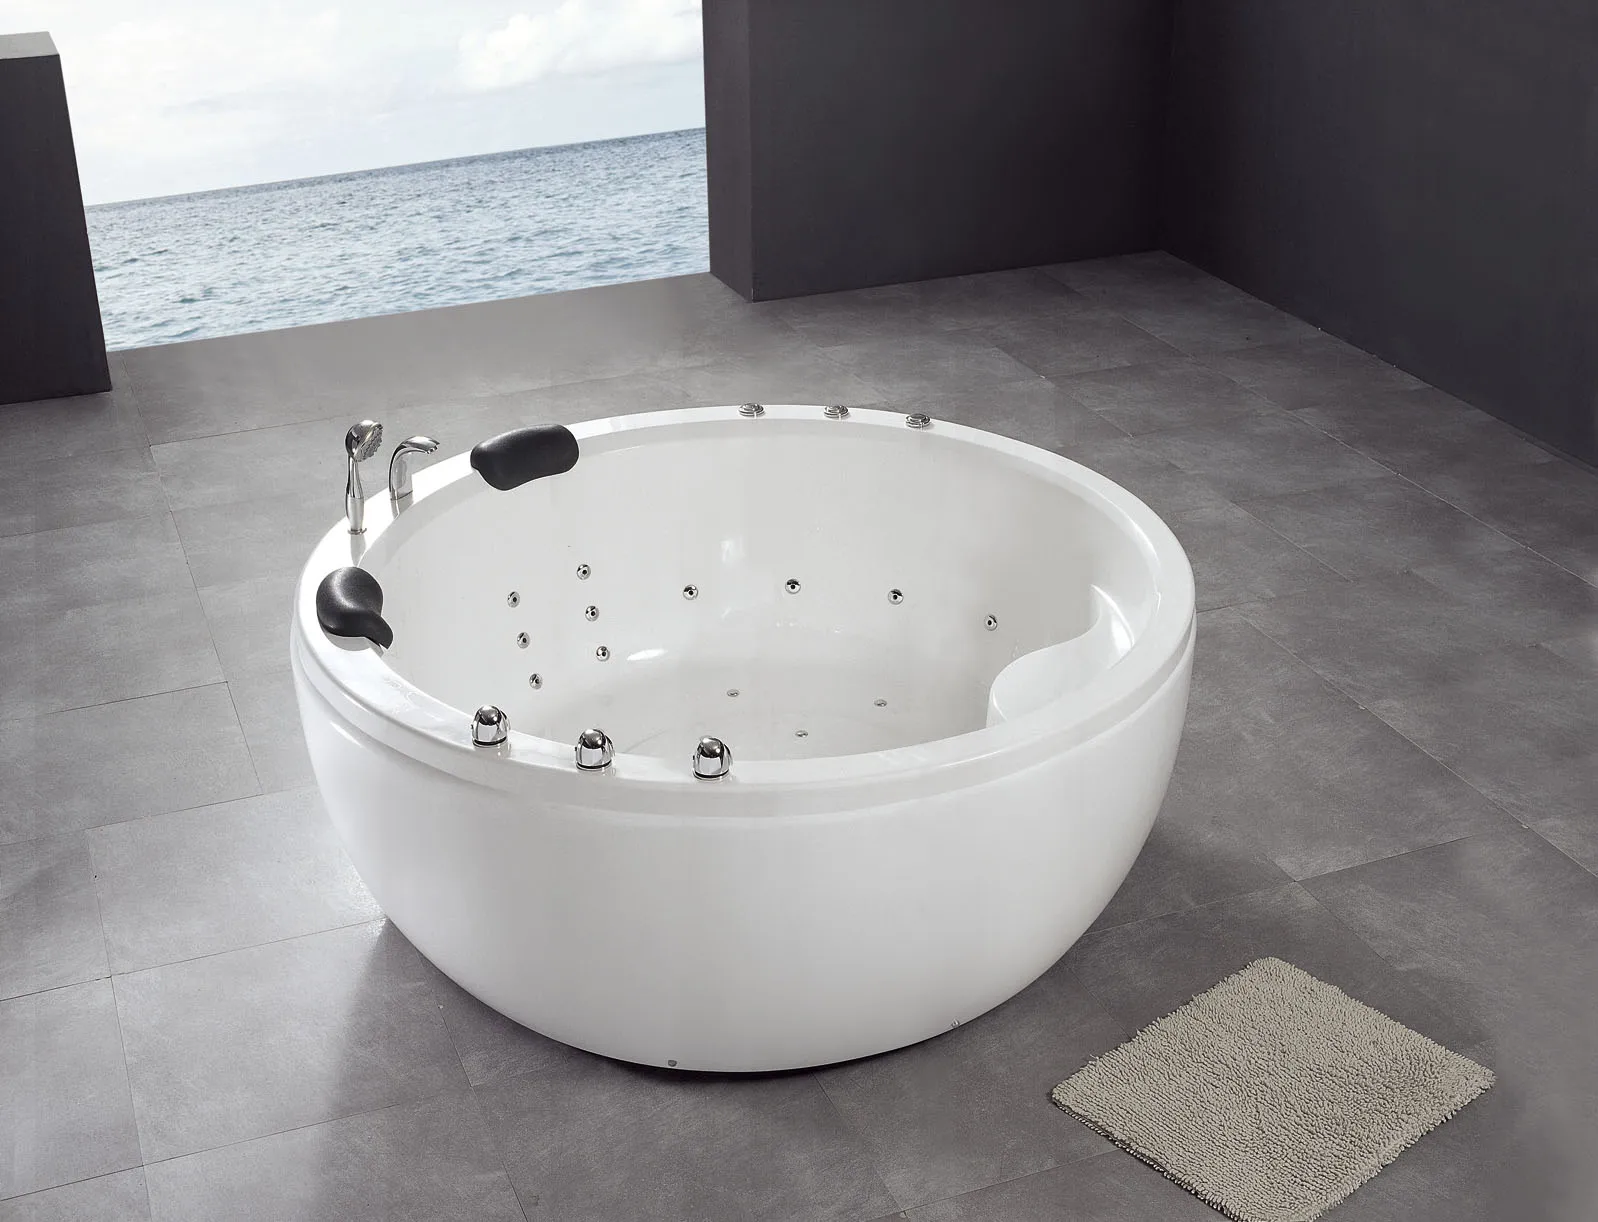 Freestanding Type Acrylic Material Whirlpool Massage Bathtub Water Jet